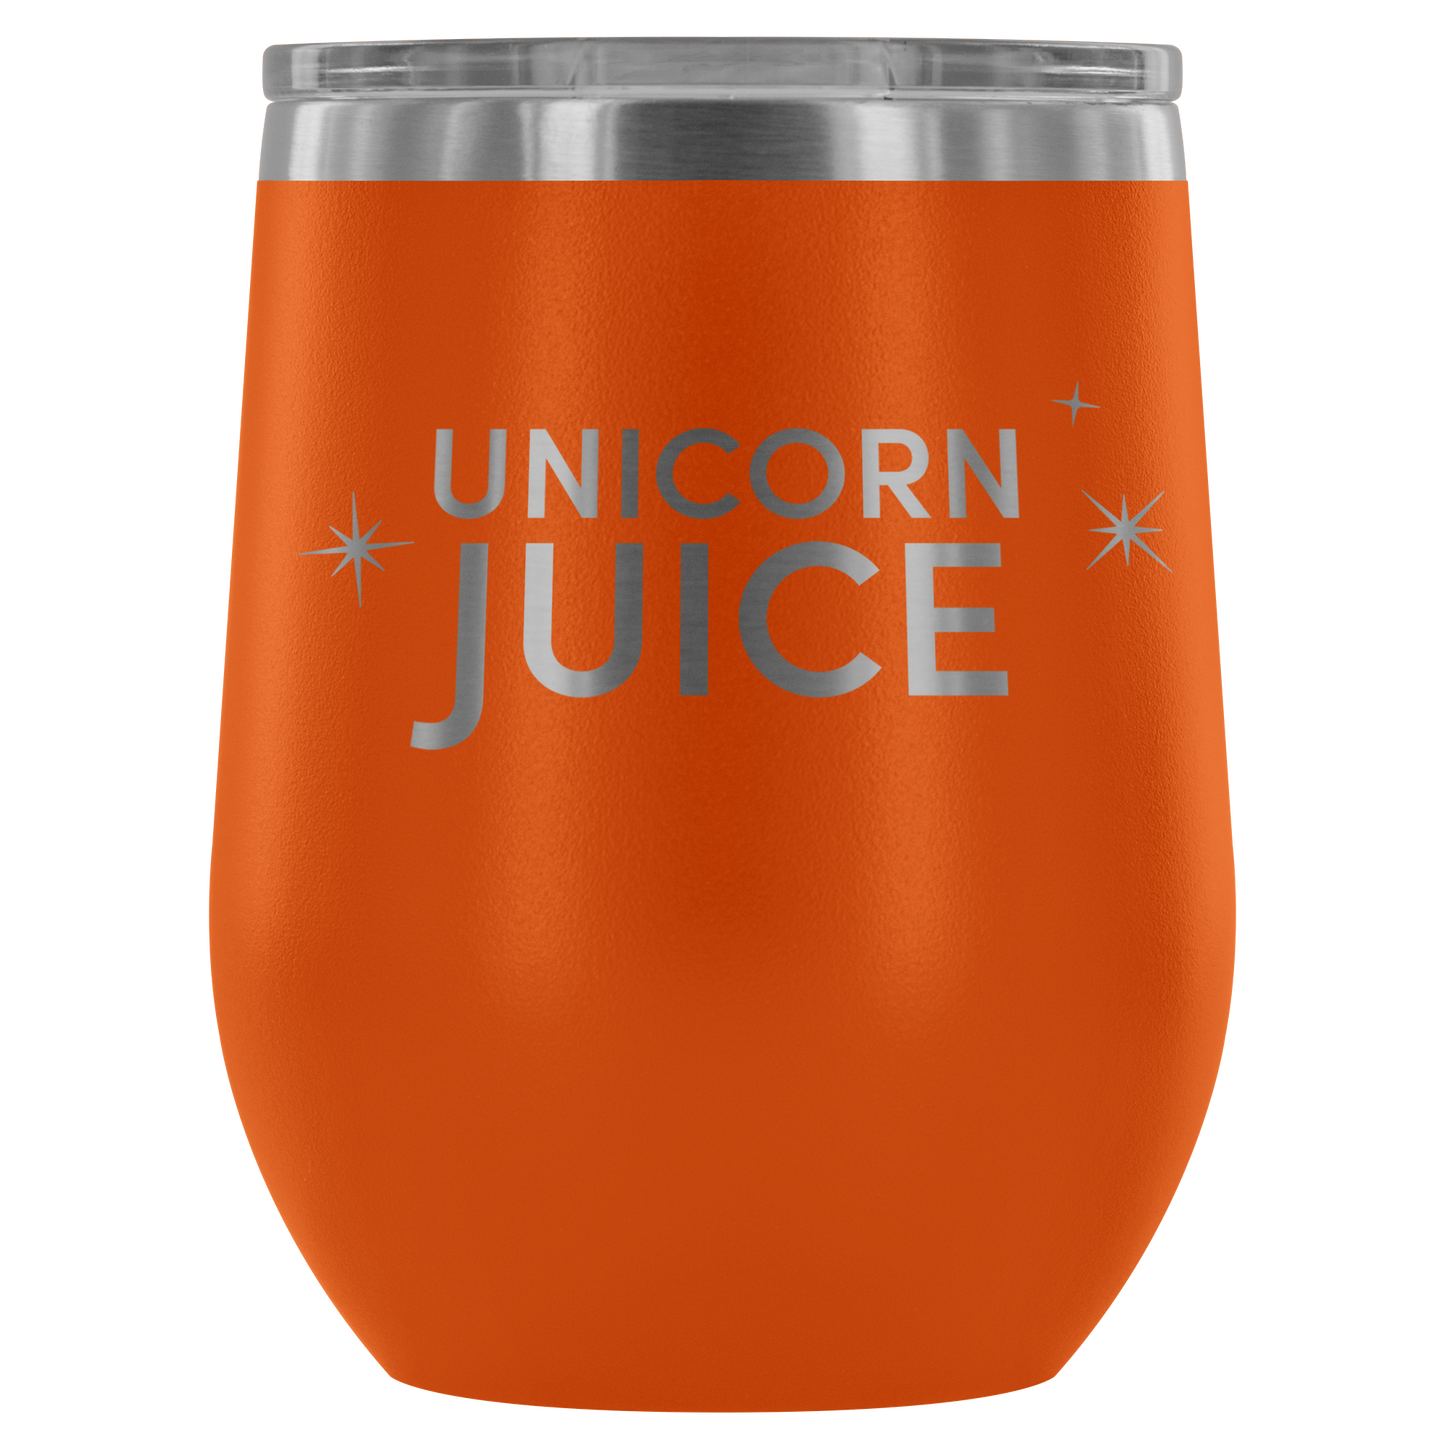 Unicorn Juice Adult Sippy Cup